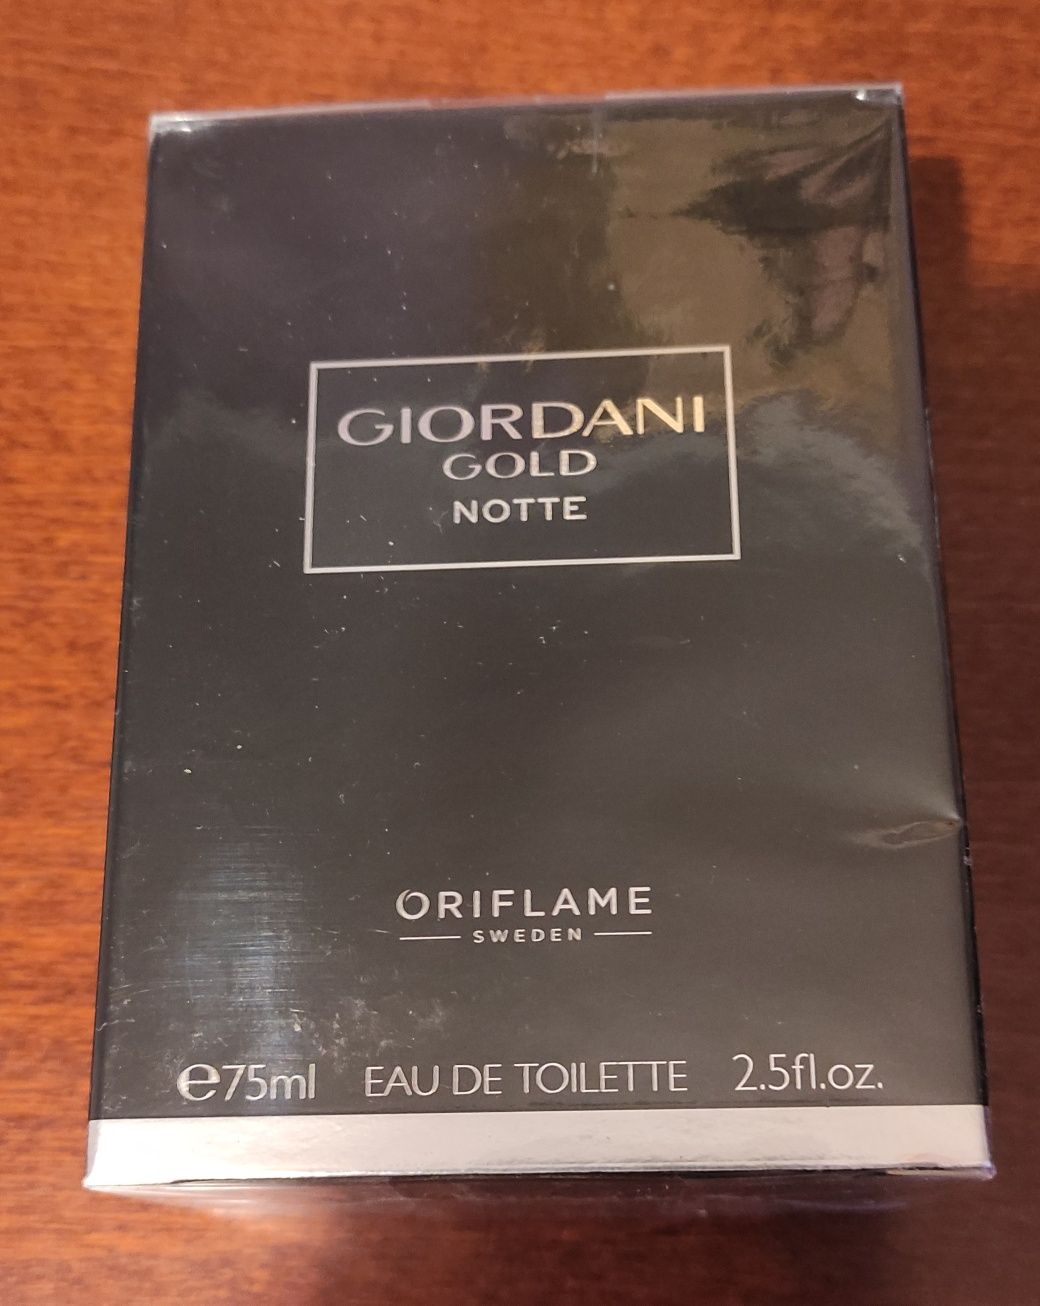 Oriflame Giordani Gold Notte unikat